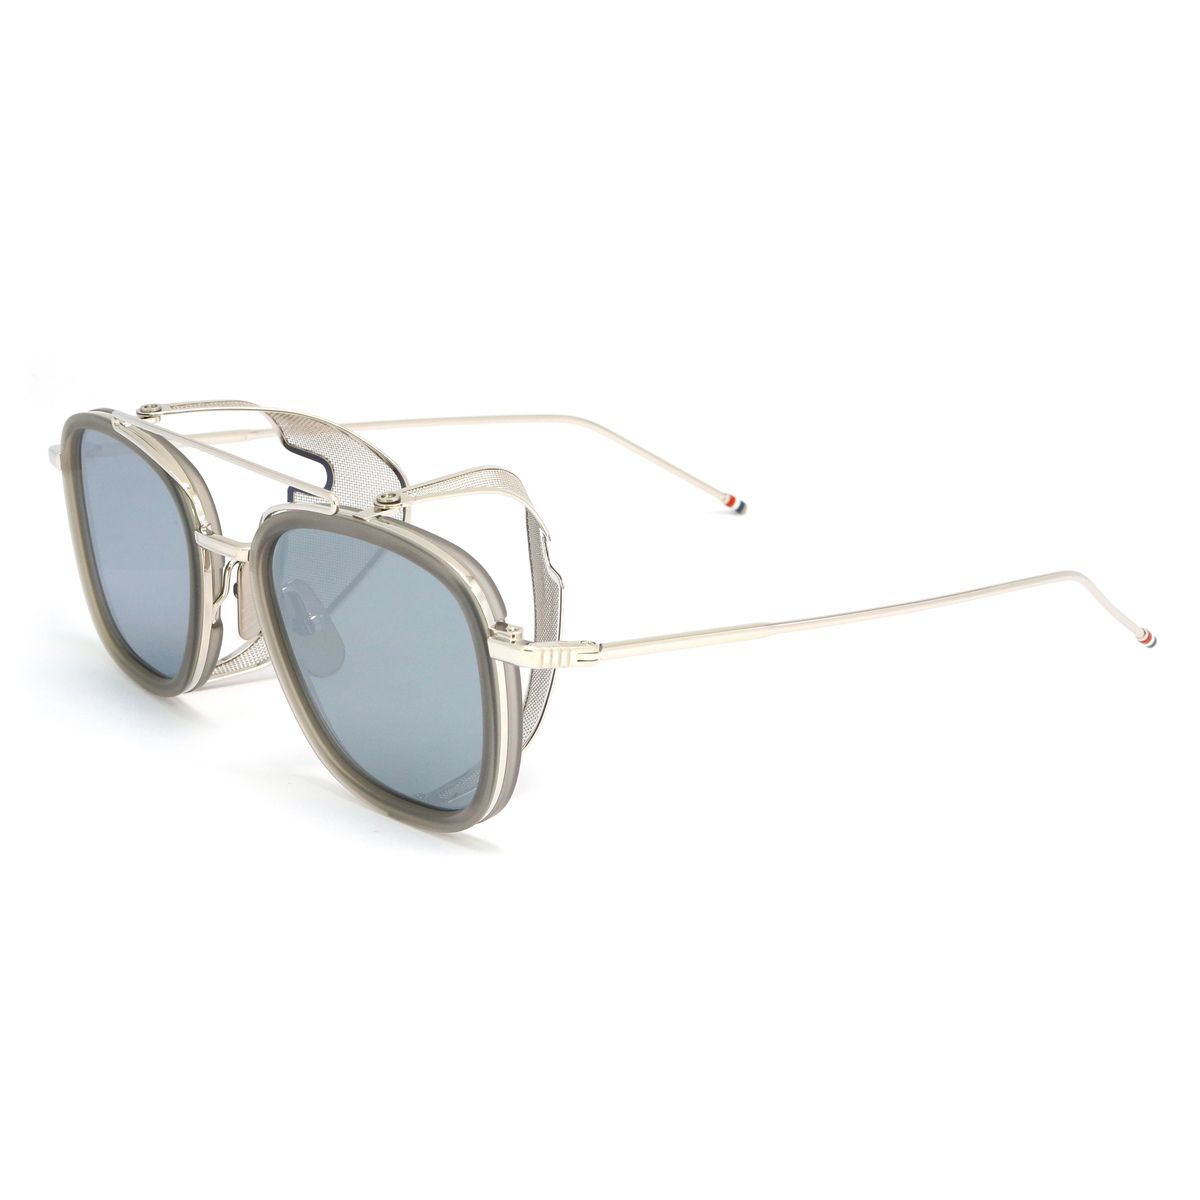 808 Square Sunglasses B - size 51